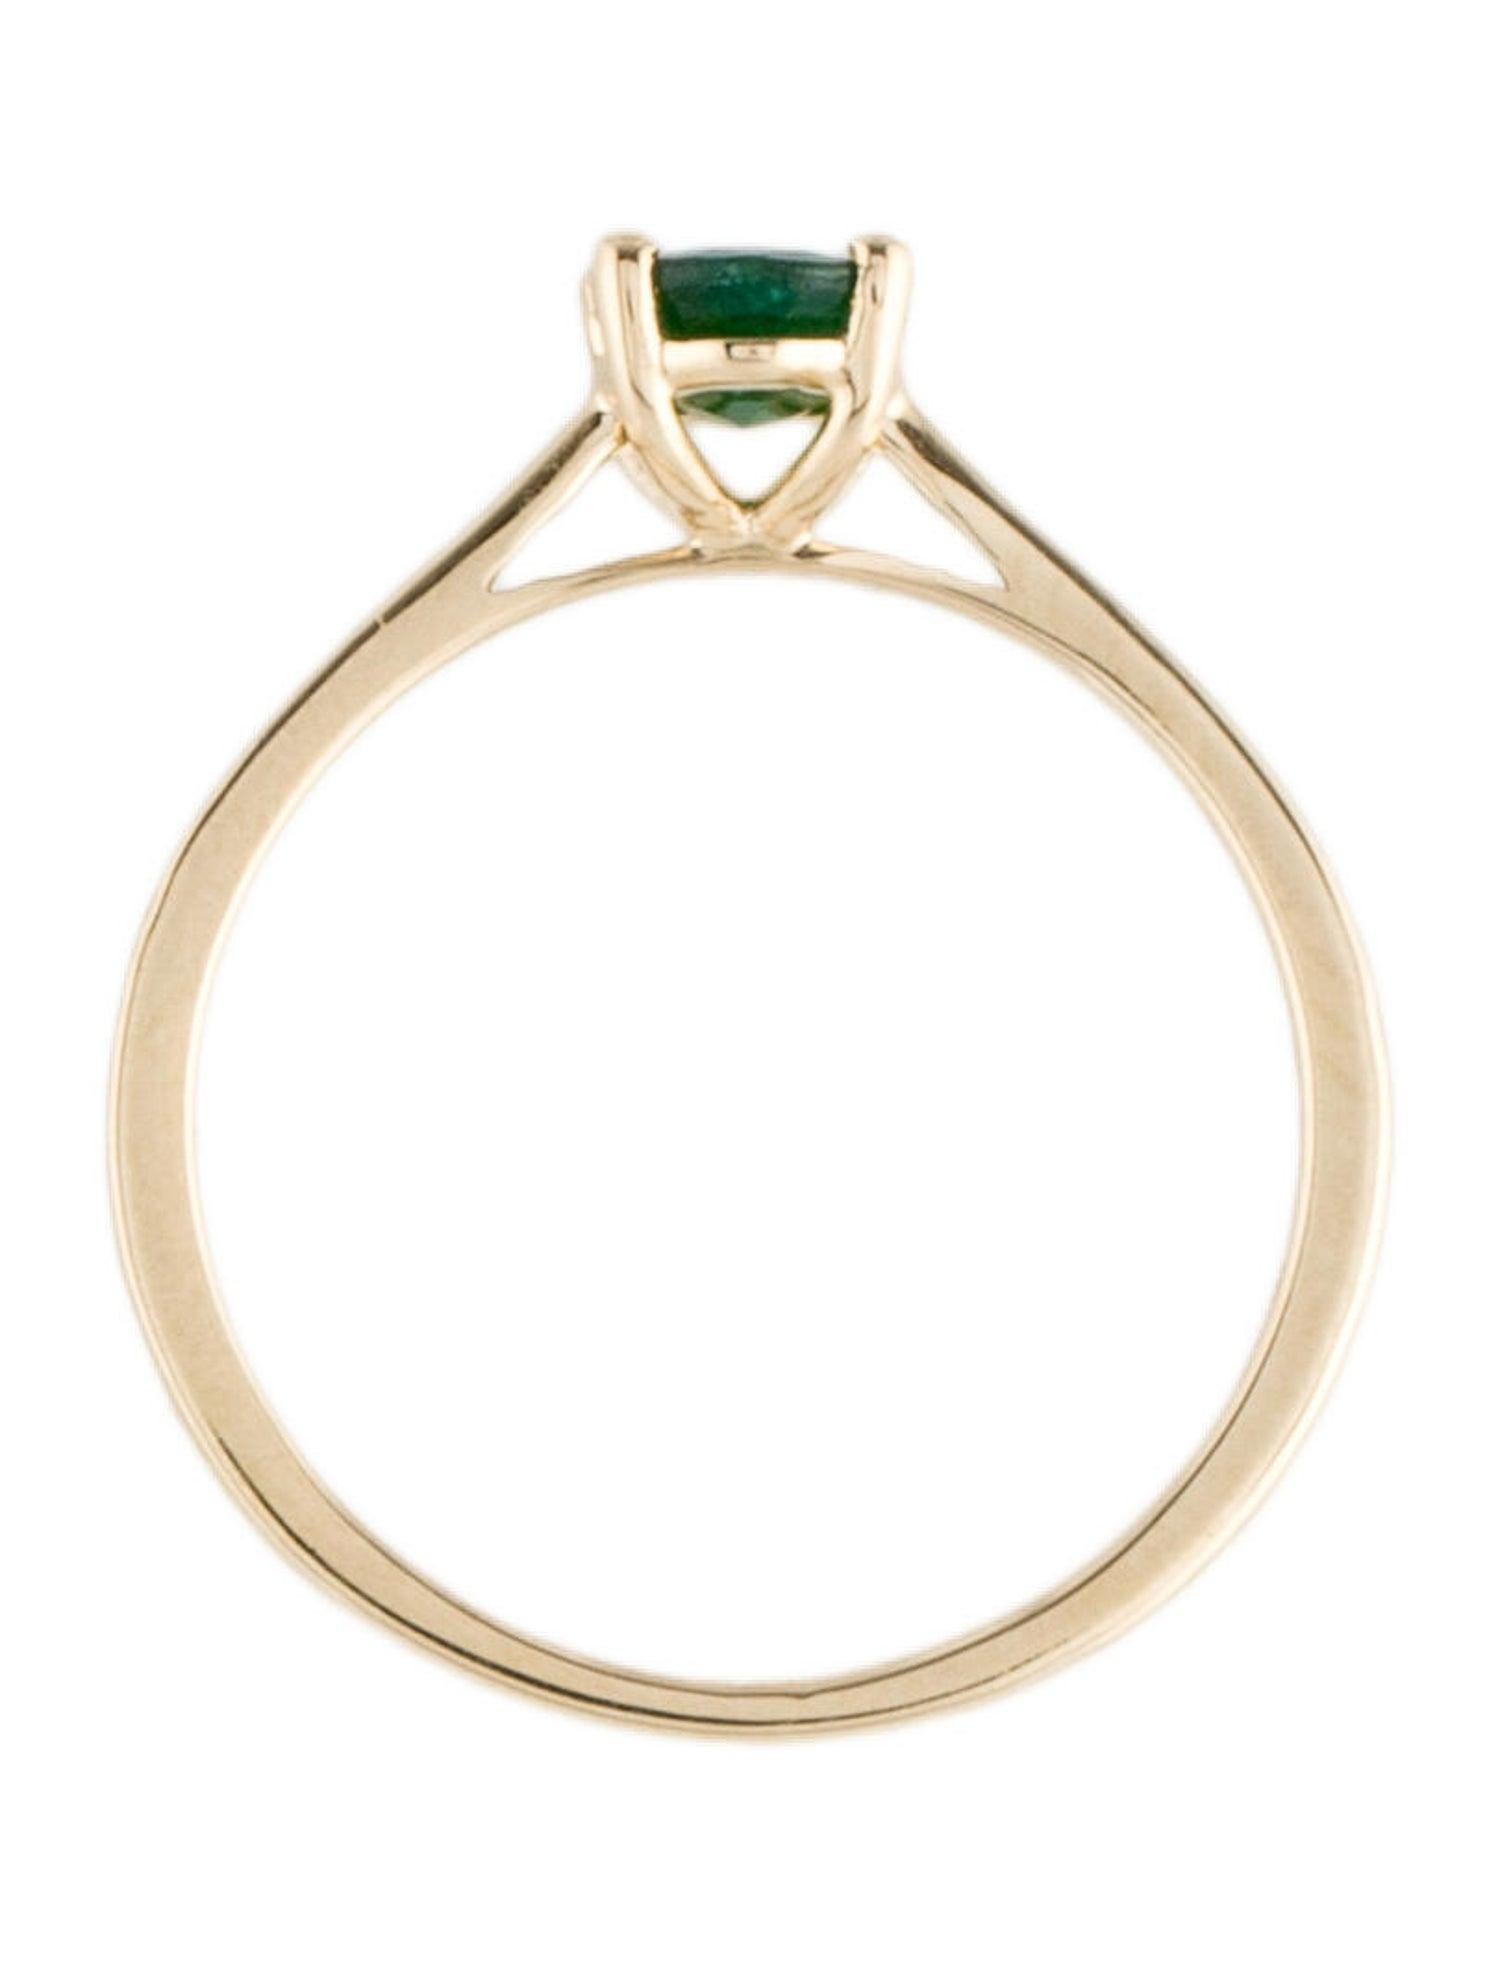 14K Emerald Cocktail Ring - Size 7 - Timeless Elegance & Luxury Statement Piece Neuf - En vente à Holtsville, NY